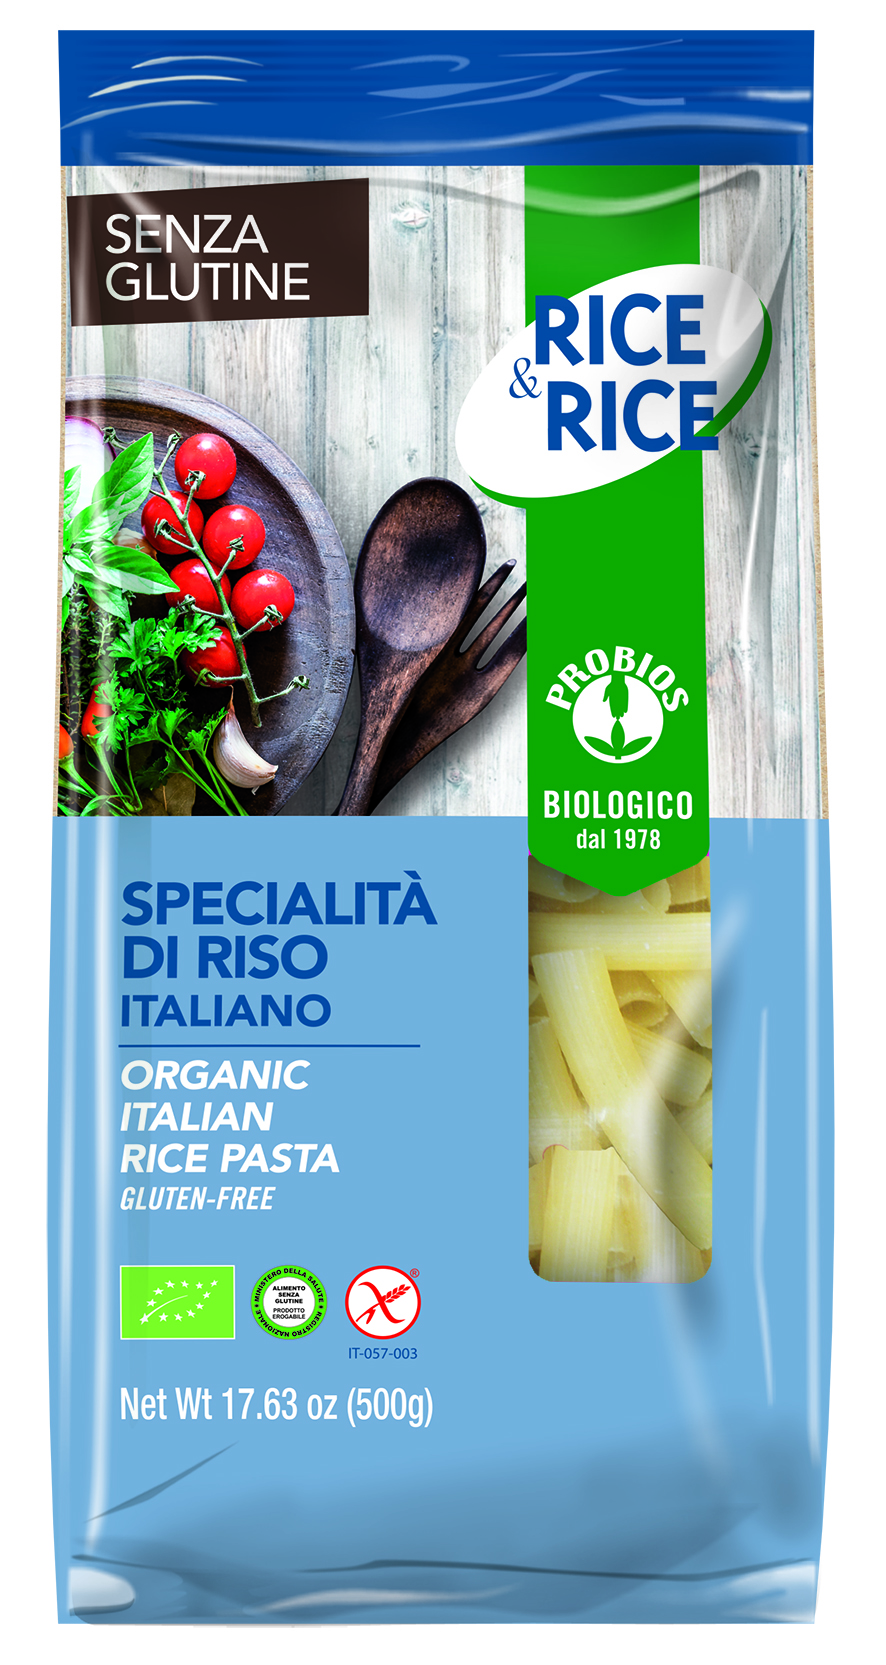 Bio Maccaroni aus weißem Reis 500g